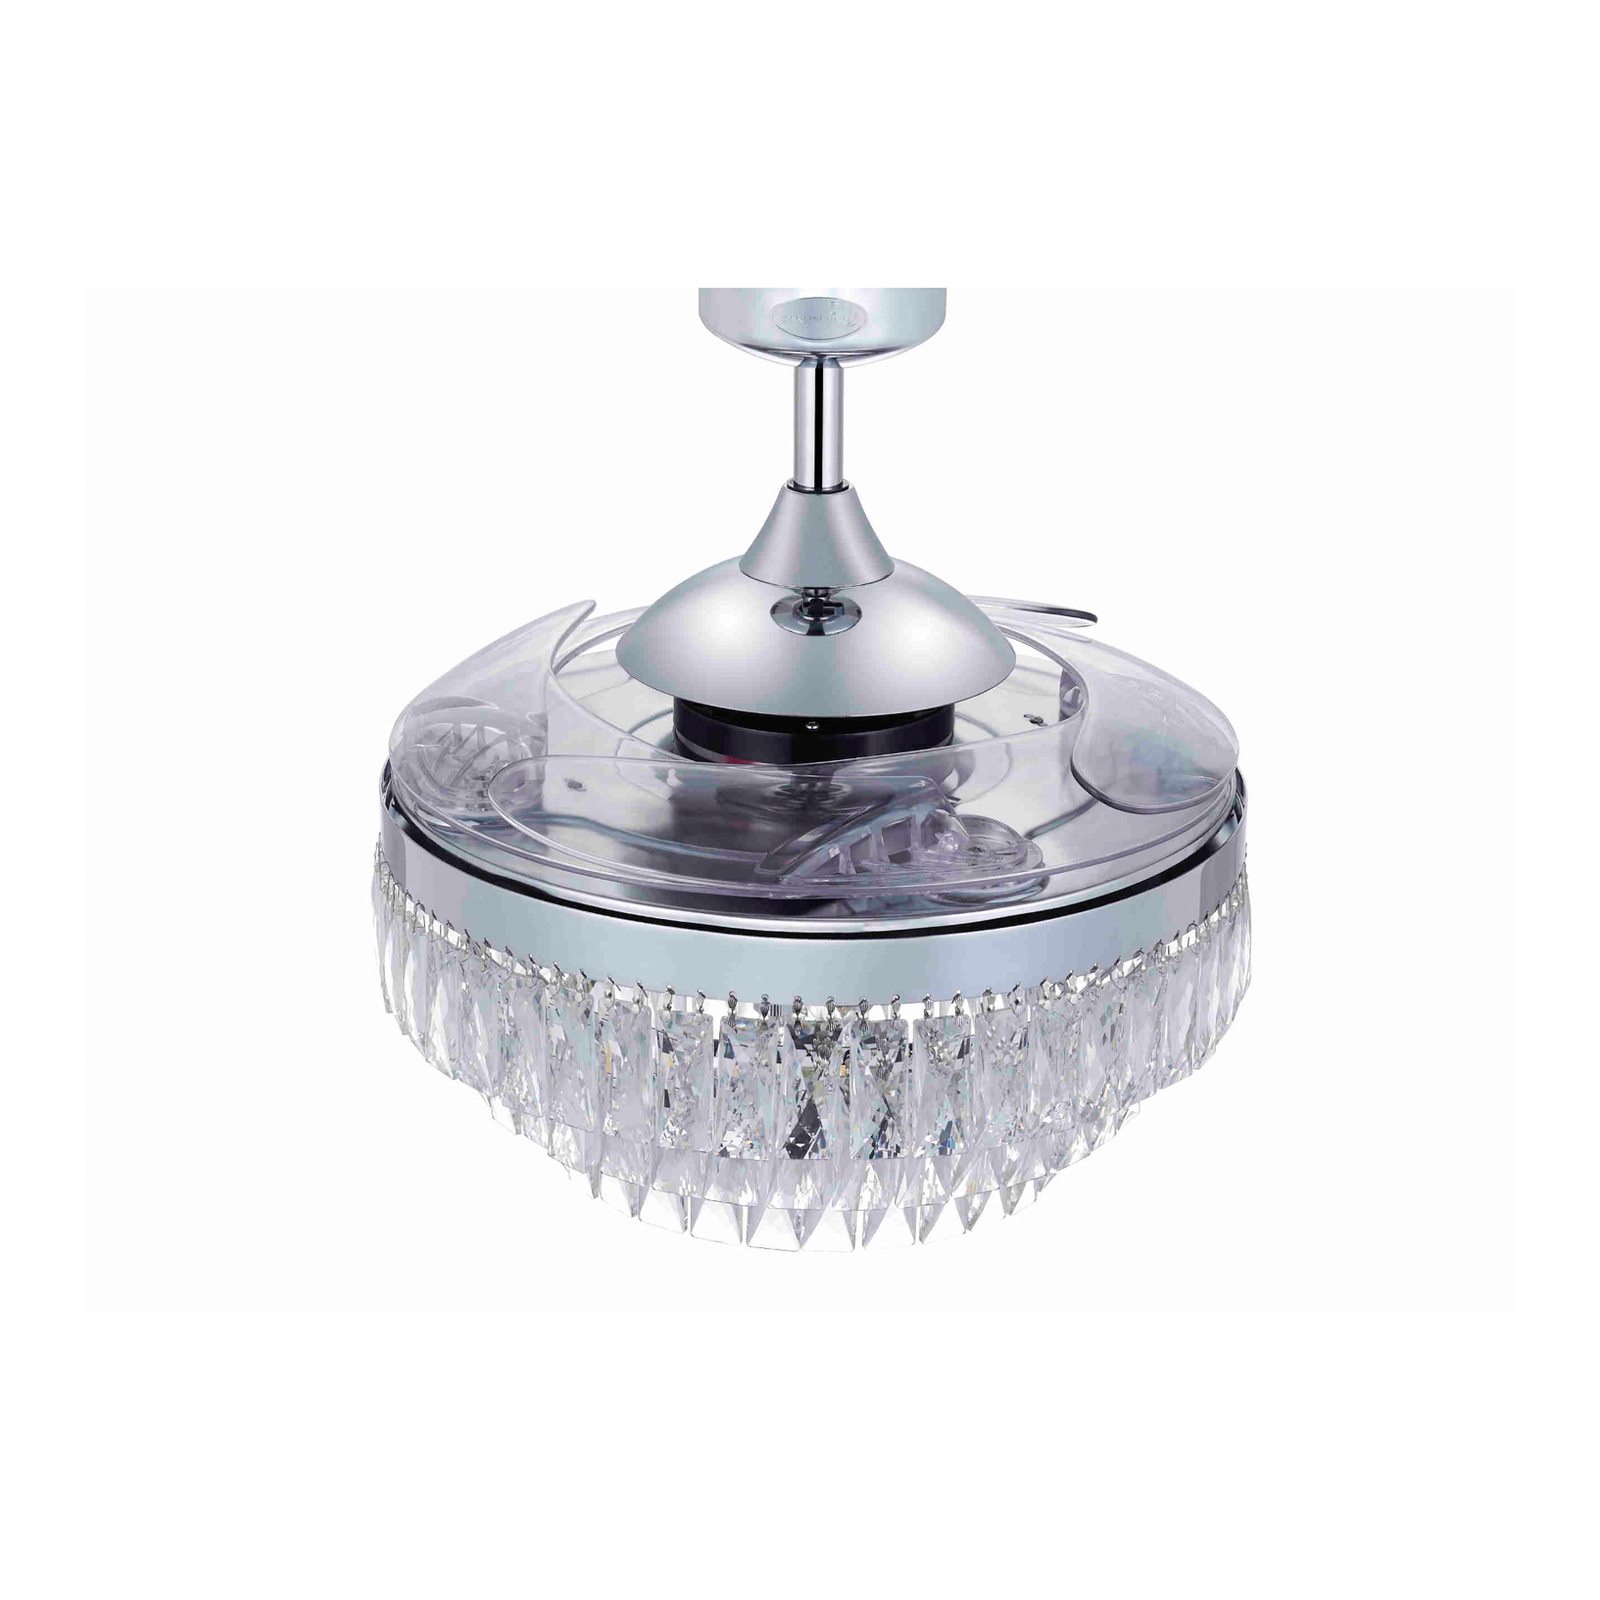 Beacon ceiling fan with light Fanaway Veil chrome silent